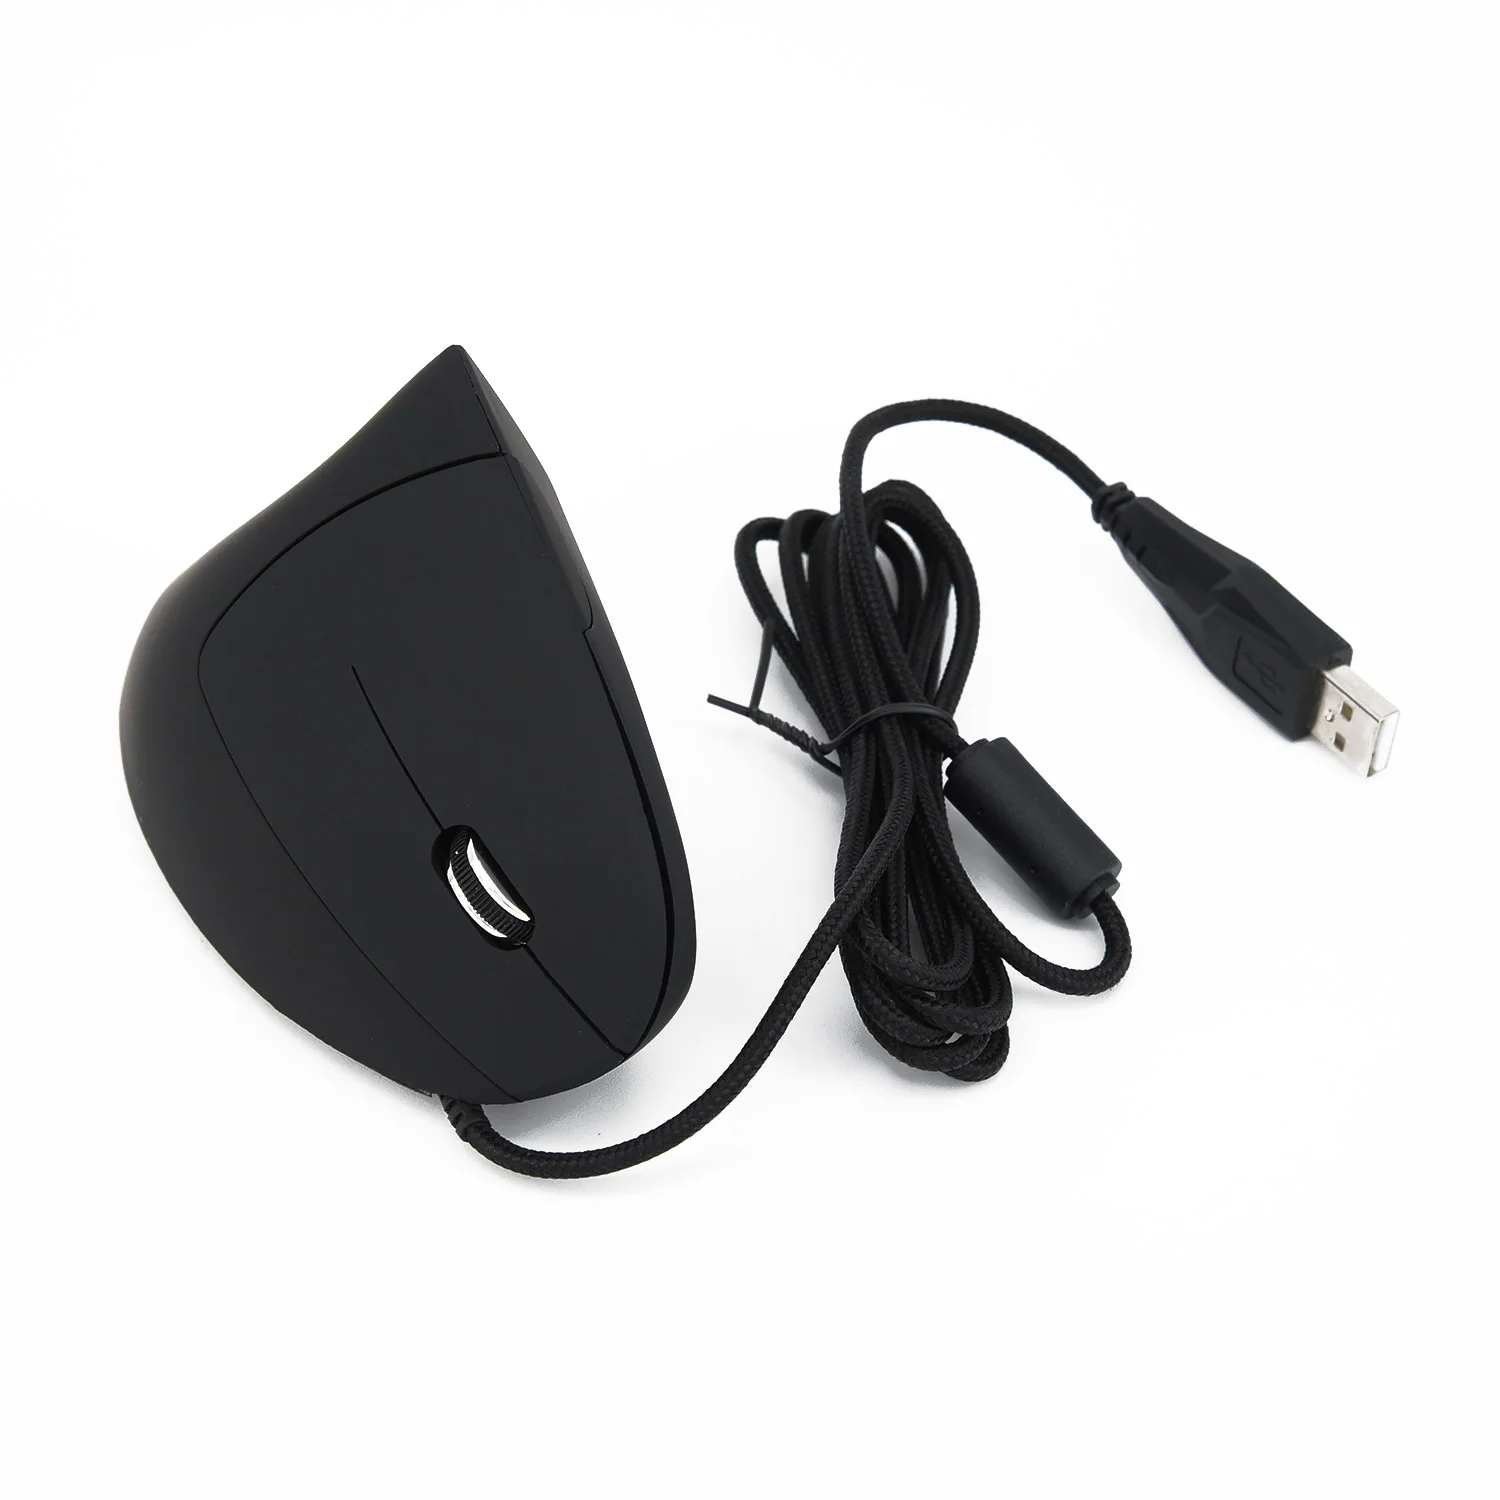 

New PC Laptop Ergonomic Optical USB Wired Vertical Mouse Mice 800/1200/2000/3200 DPI Wired Vertical Mouse(black)